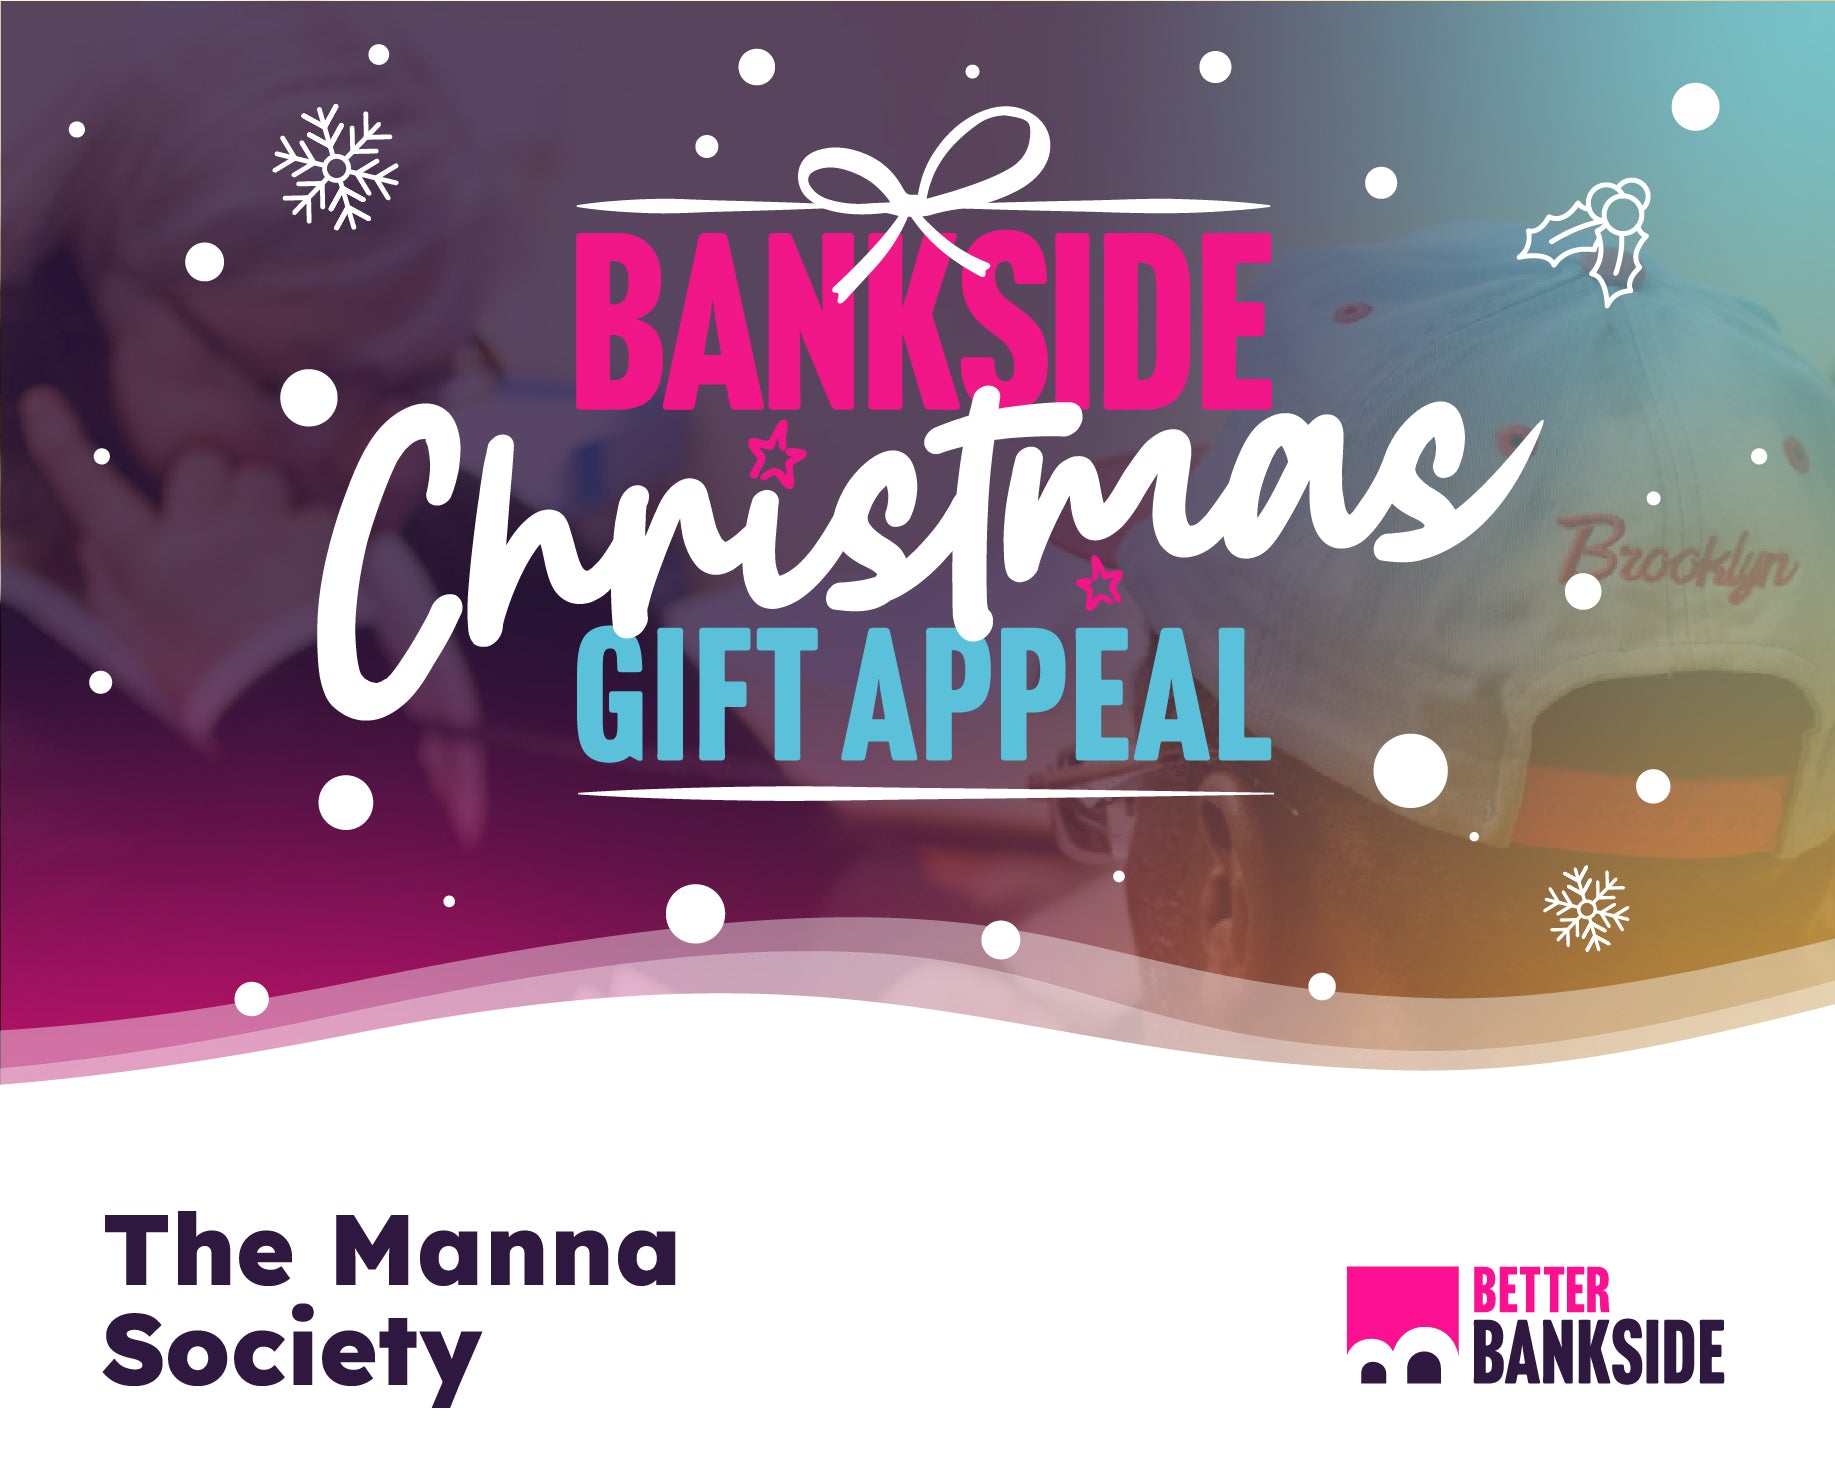 Better Bankside: The Manna Society